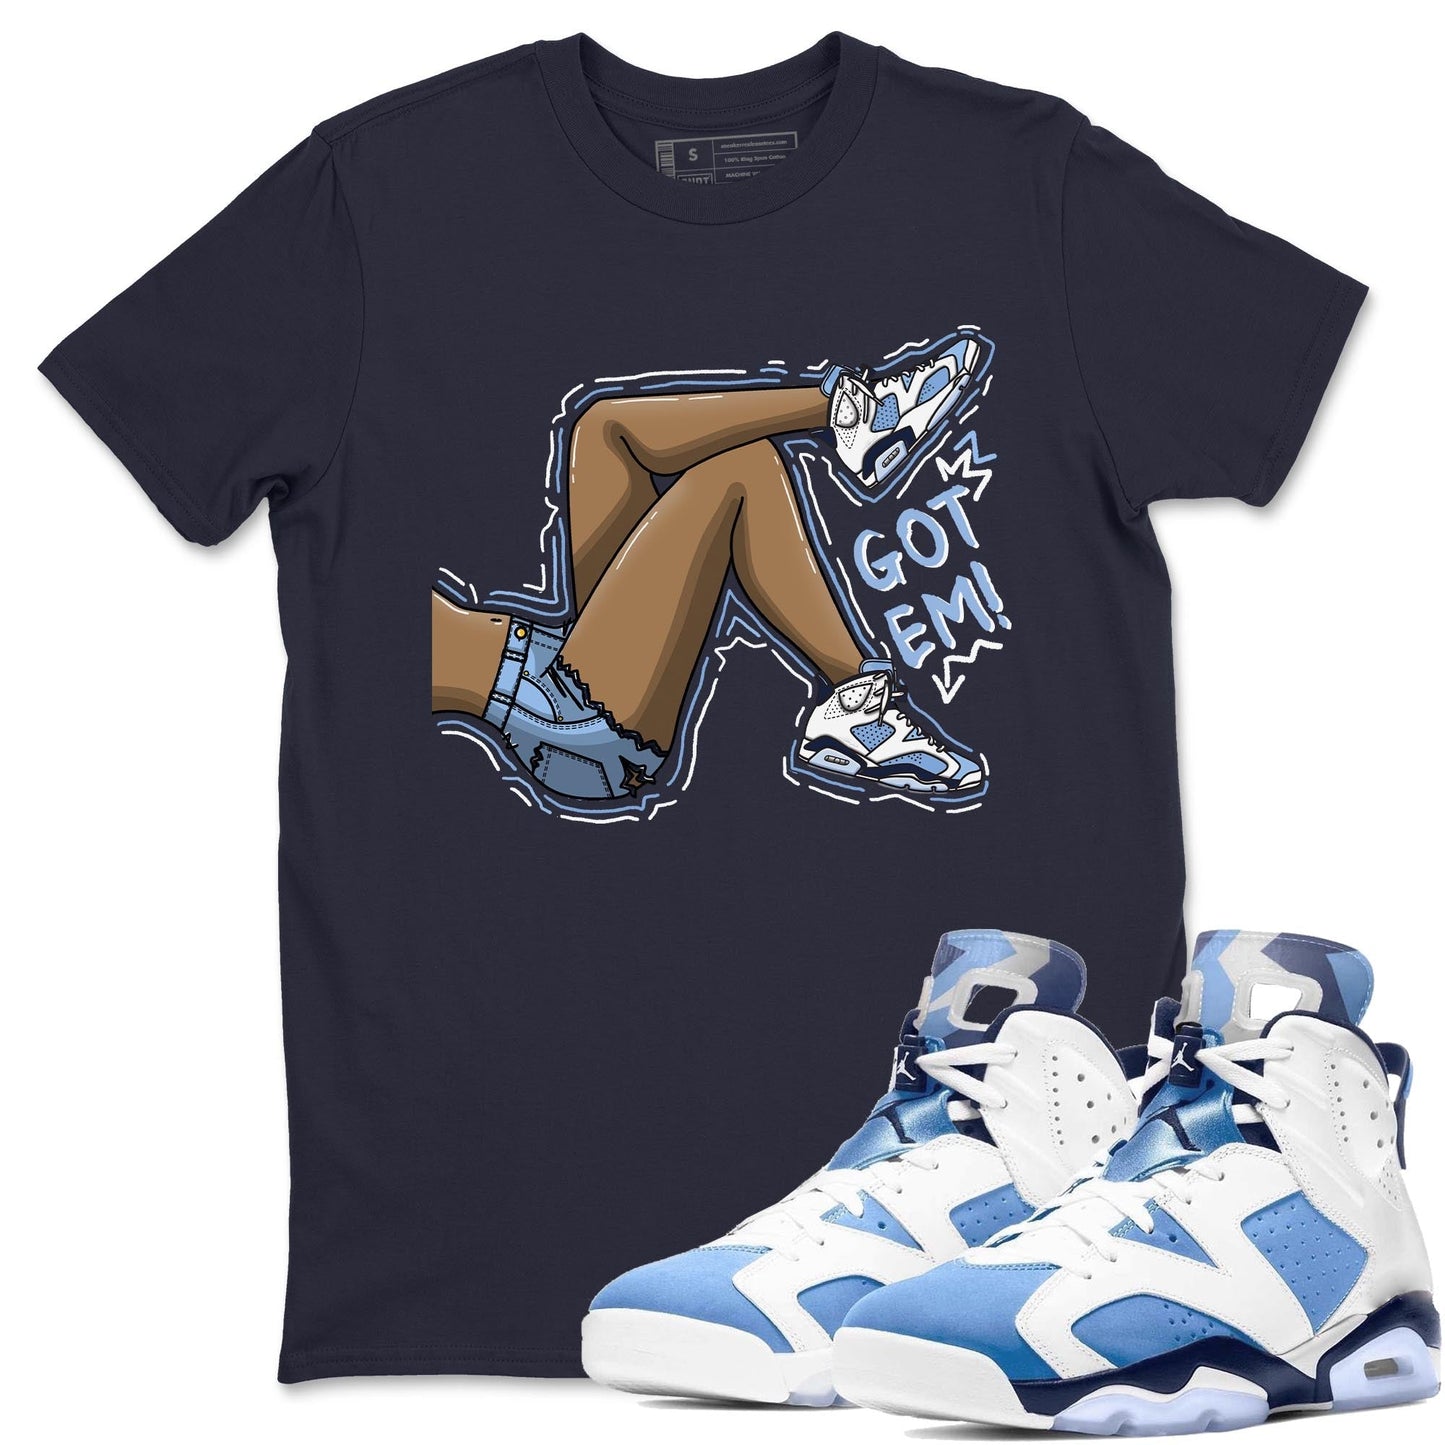 Jordan 6 UNC Shirt To Match Jordans Got Em Legs Sneaker Tees Jordan 6 UNC Drip Gear Zone Sneaker Matching Clothing Unisex Shirts